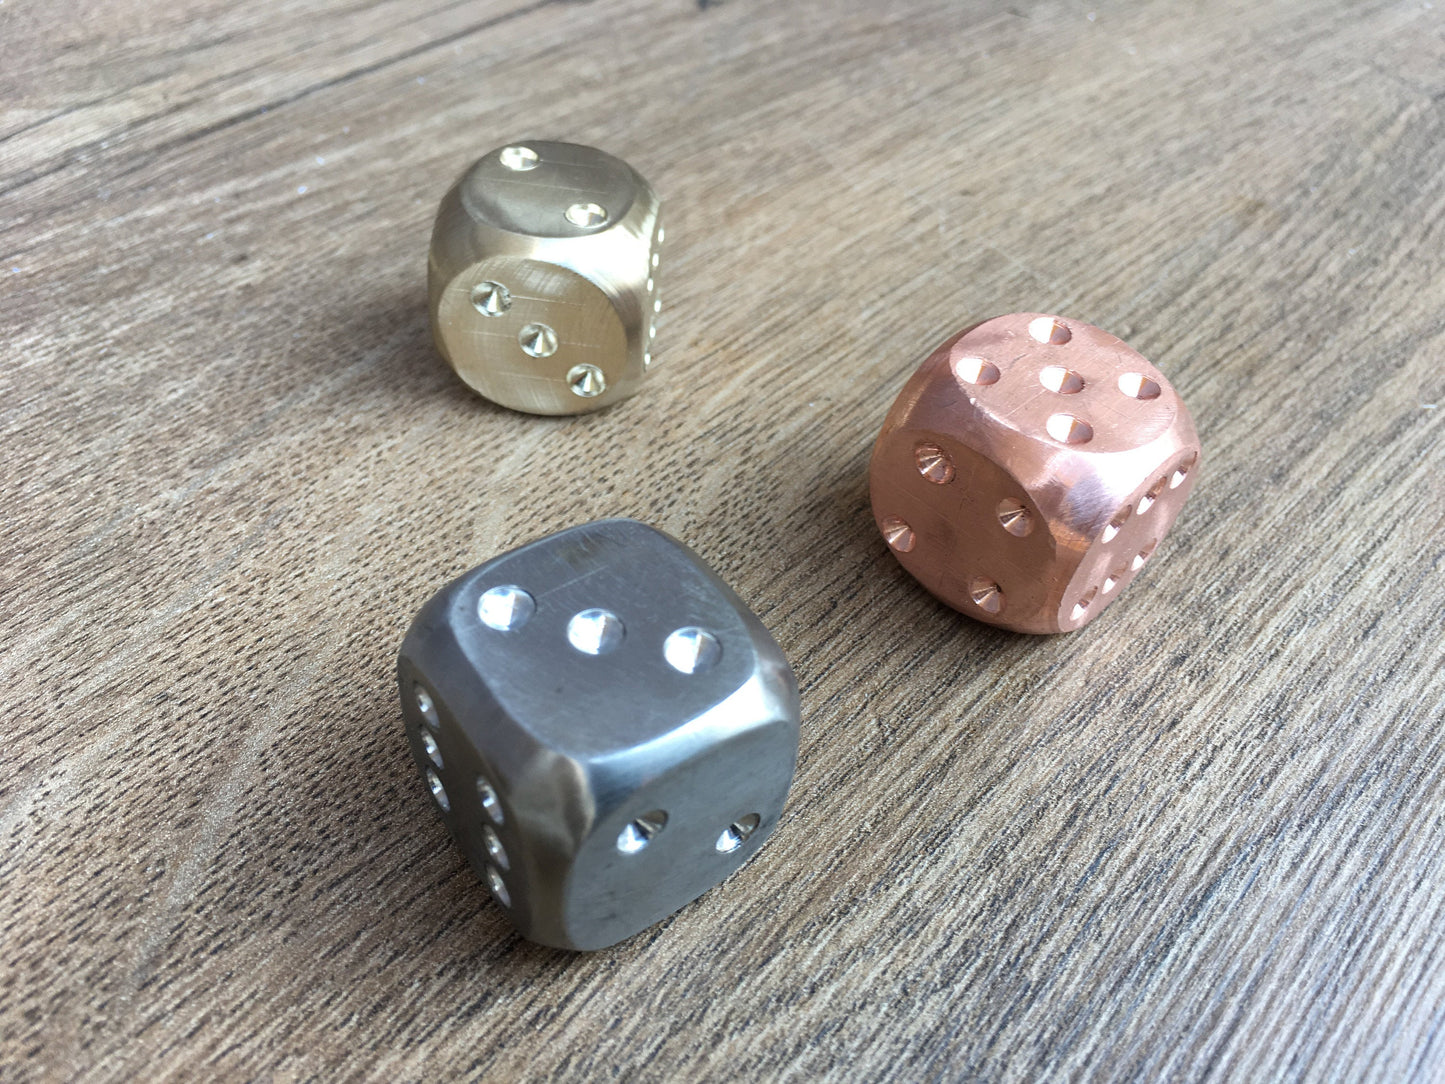 Dices, bronze dice, copper dice, dice set, bronze anniversary, copper anniversary, iron anniversary, tabletop game, board game,dice gift